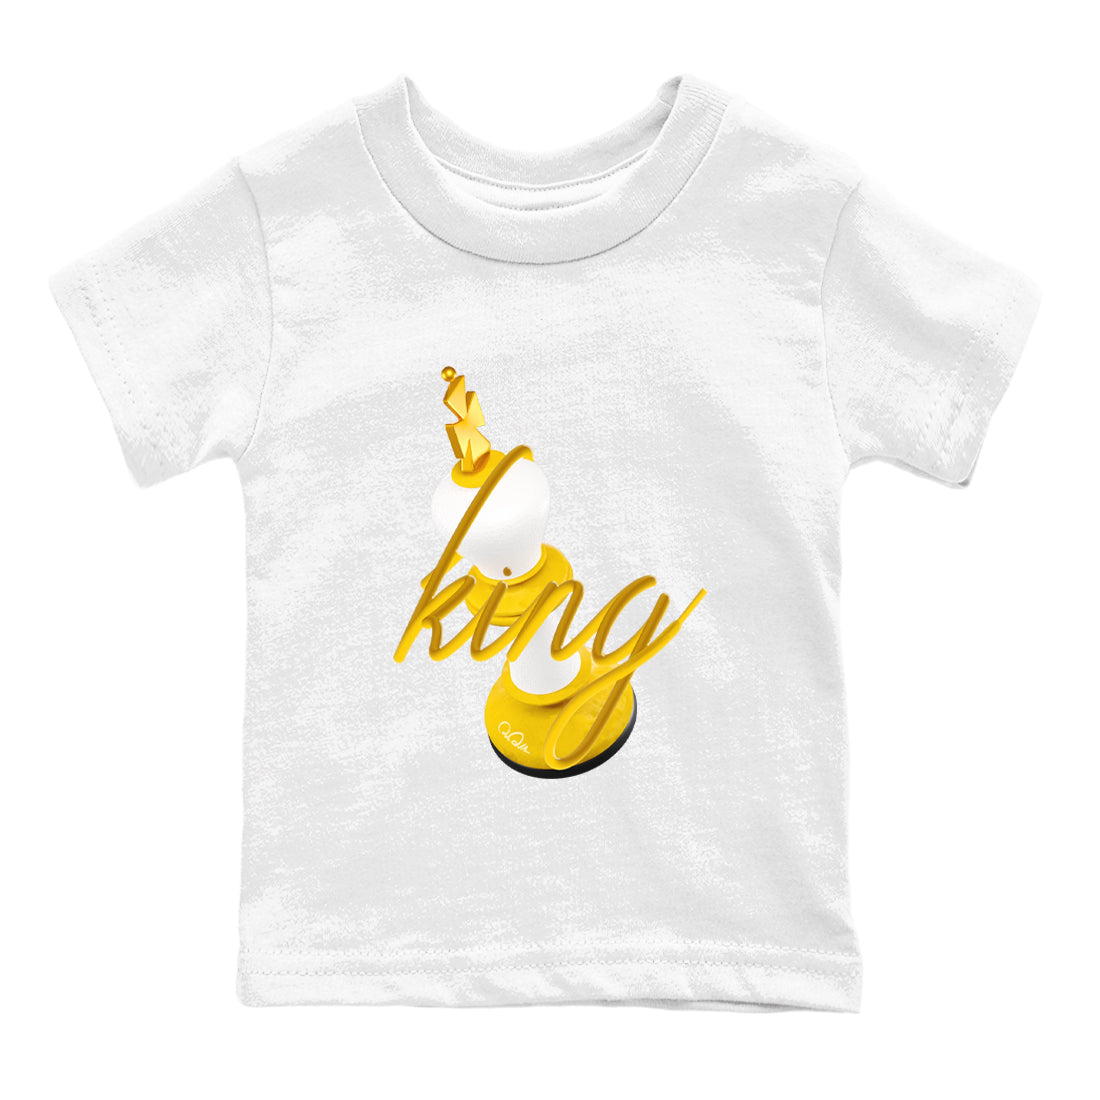 6s Yellow Ochre shirt to match jordans 3D King sneaker tees Air Jordan 6 Yellow Ochre SNRT Sneaker Release Tees Baby Toddler White 2 T-Shirt